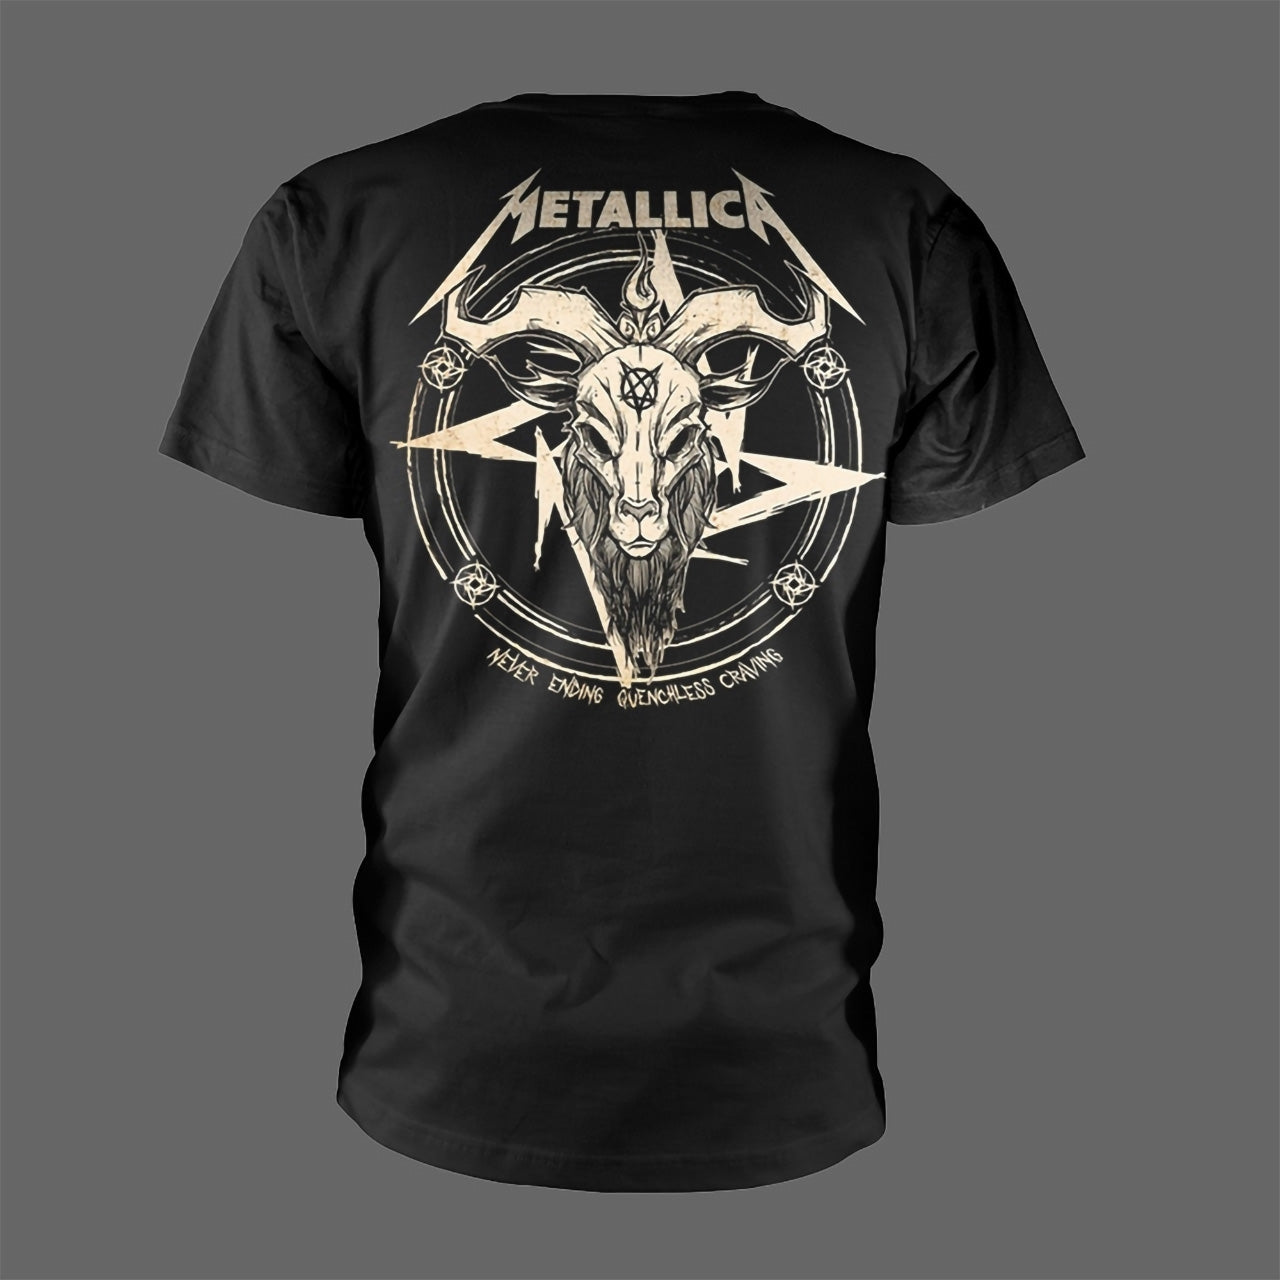 Metallica - If Darkness Had a Son (T-Shirt)